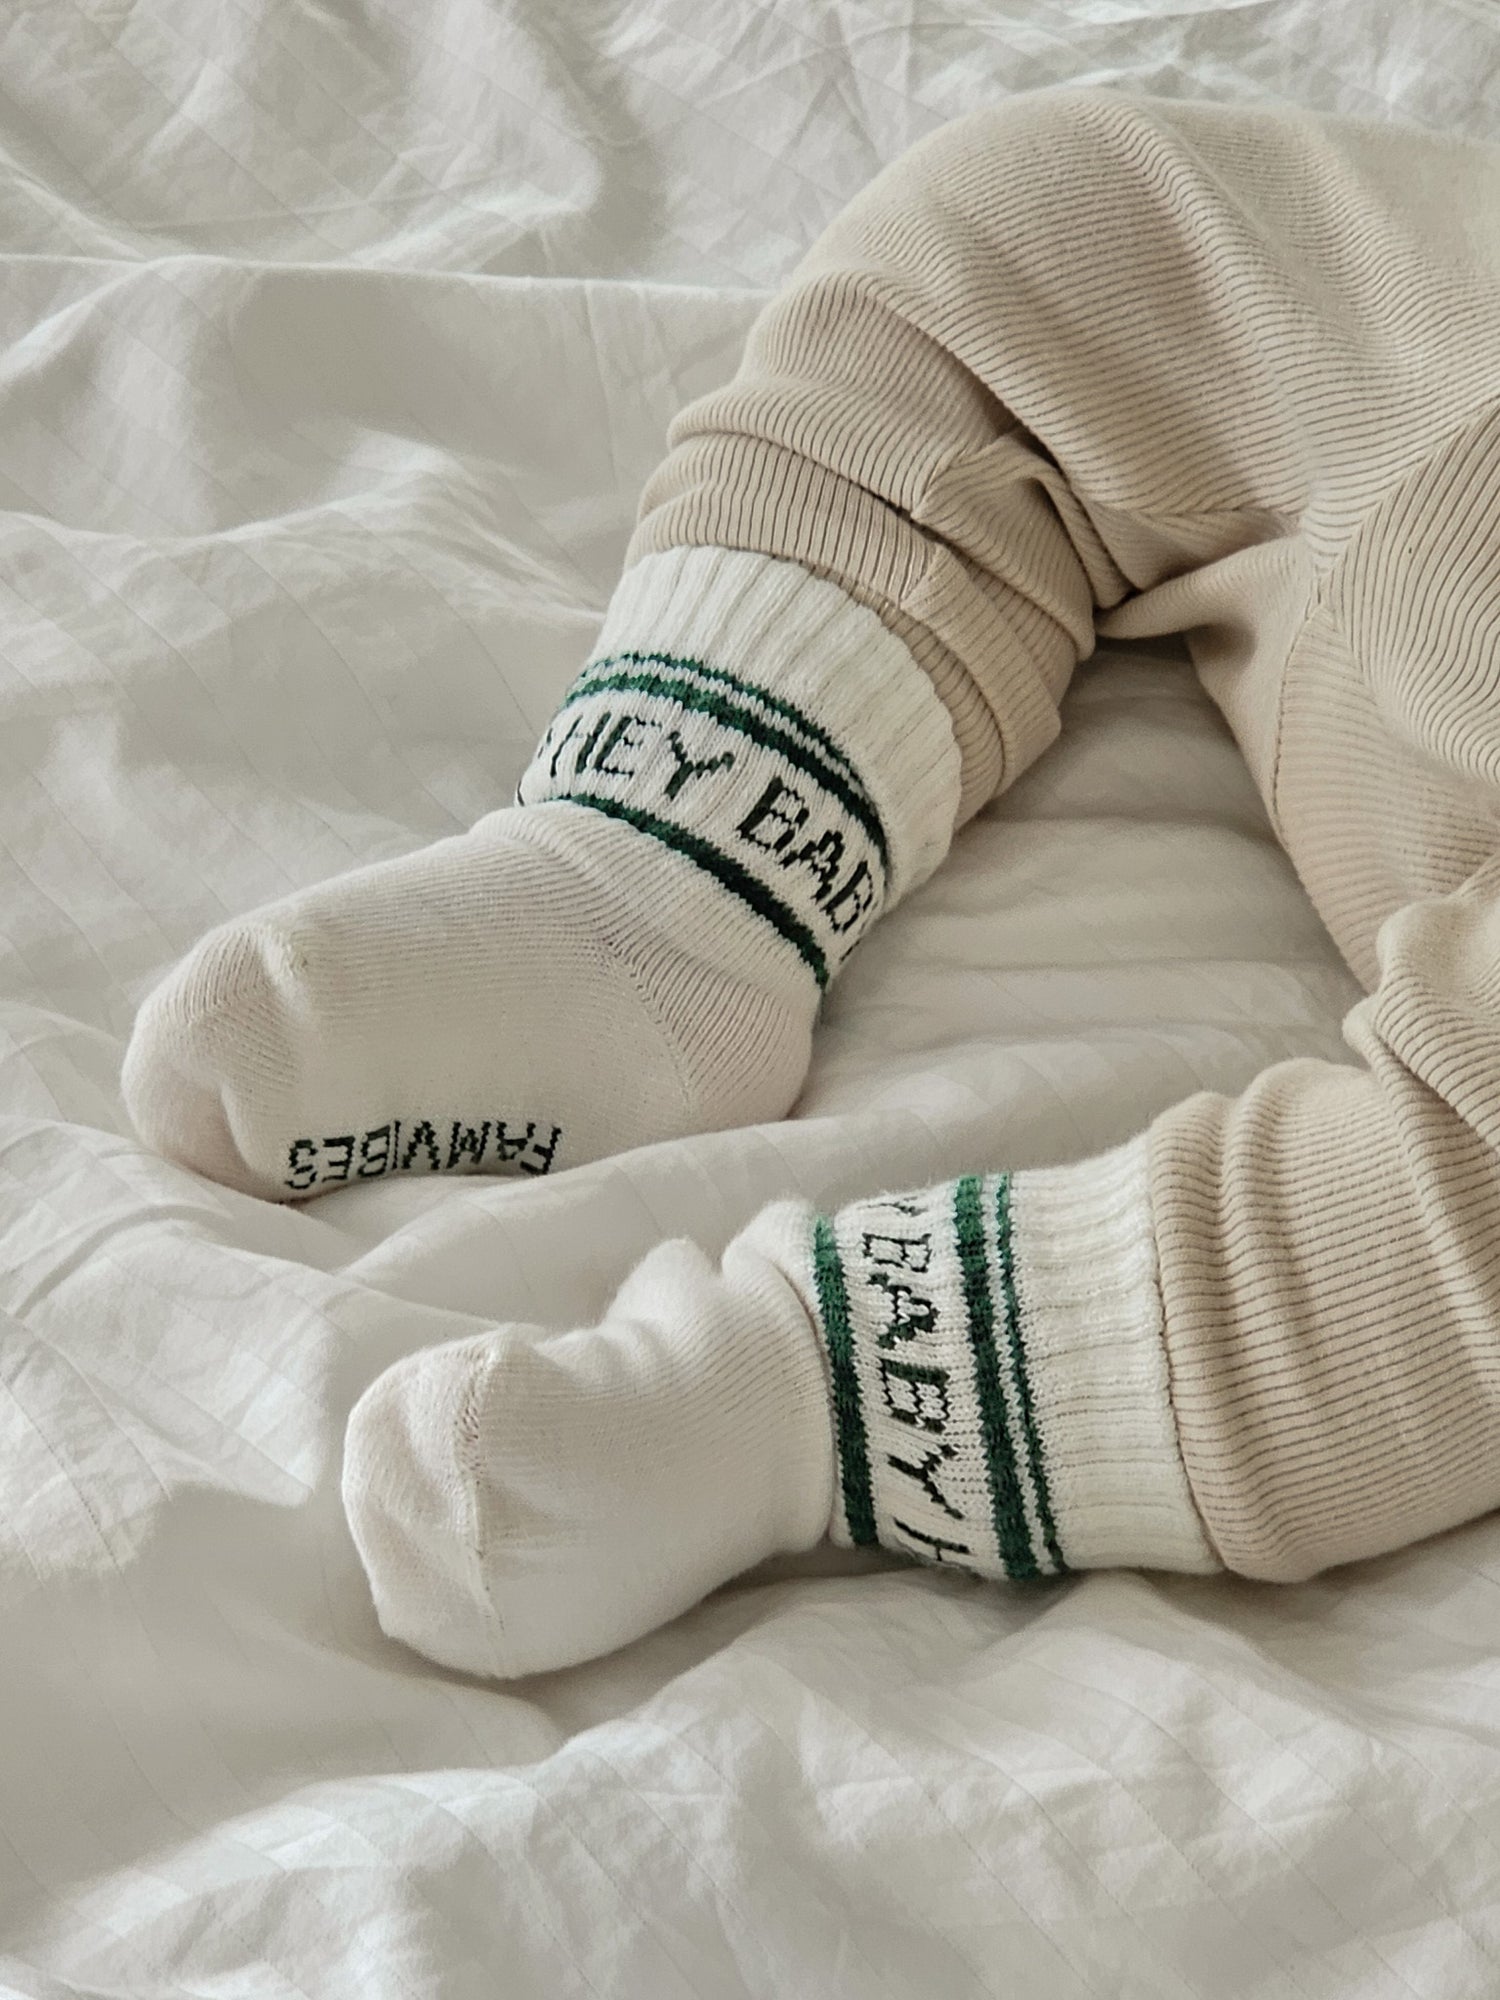 HEY BABY - Socken milk | green - FAMVIBES 